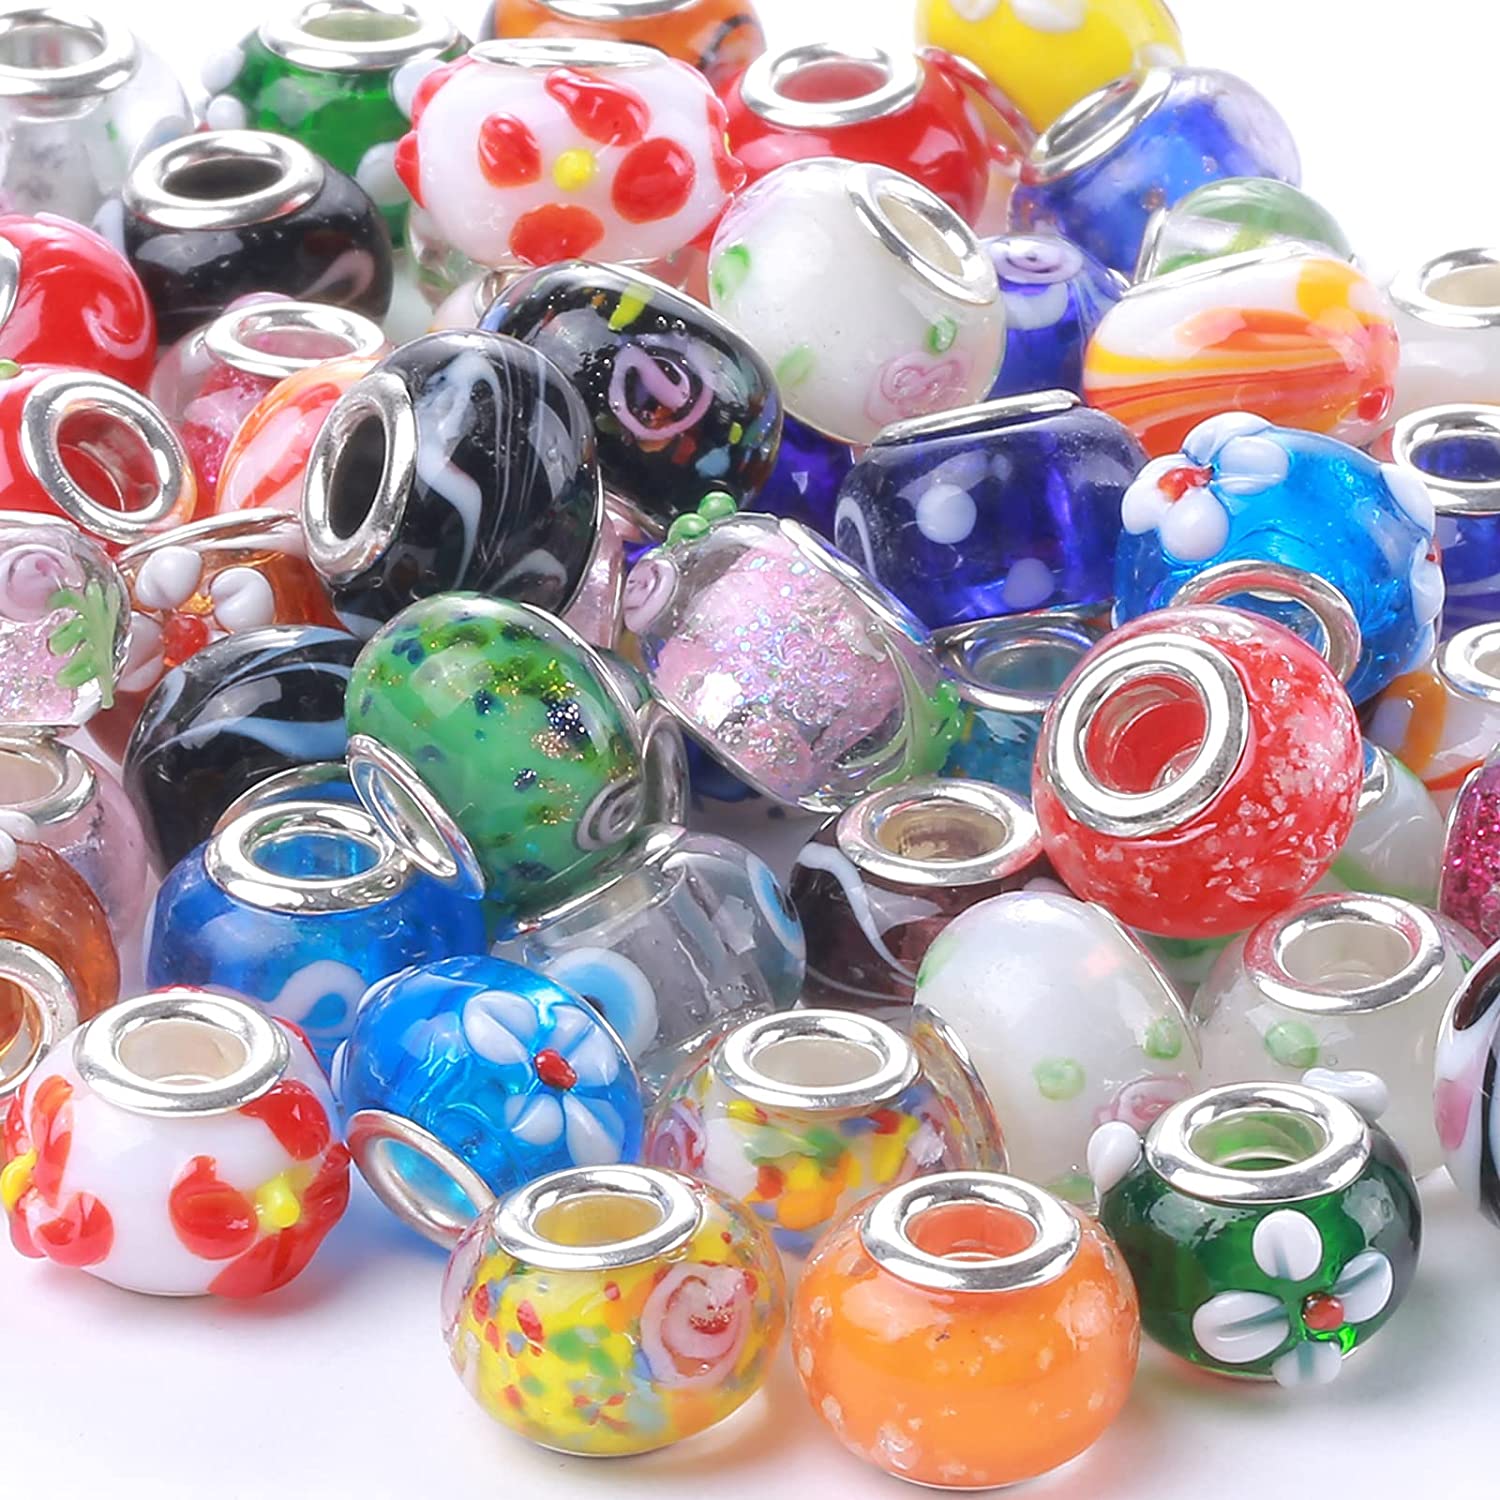  240 Pcs Assortment European Beads for Jewelry Making